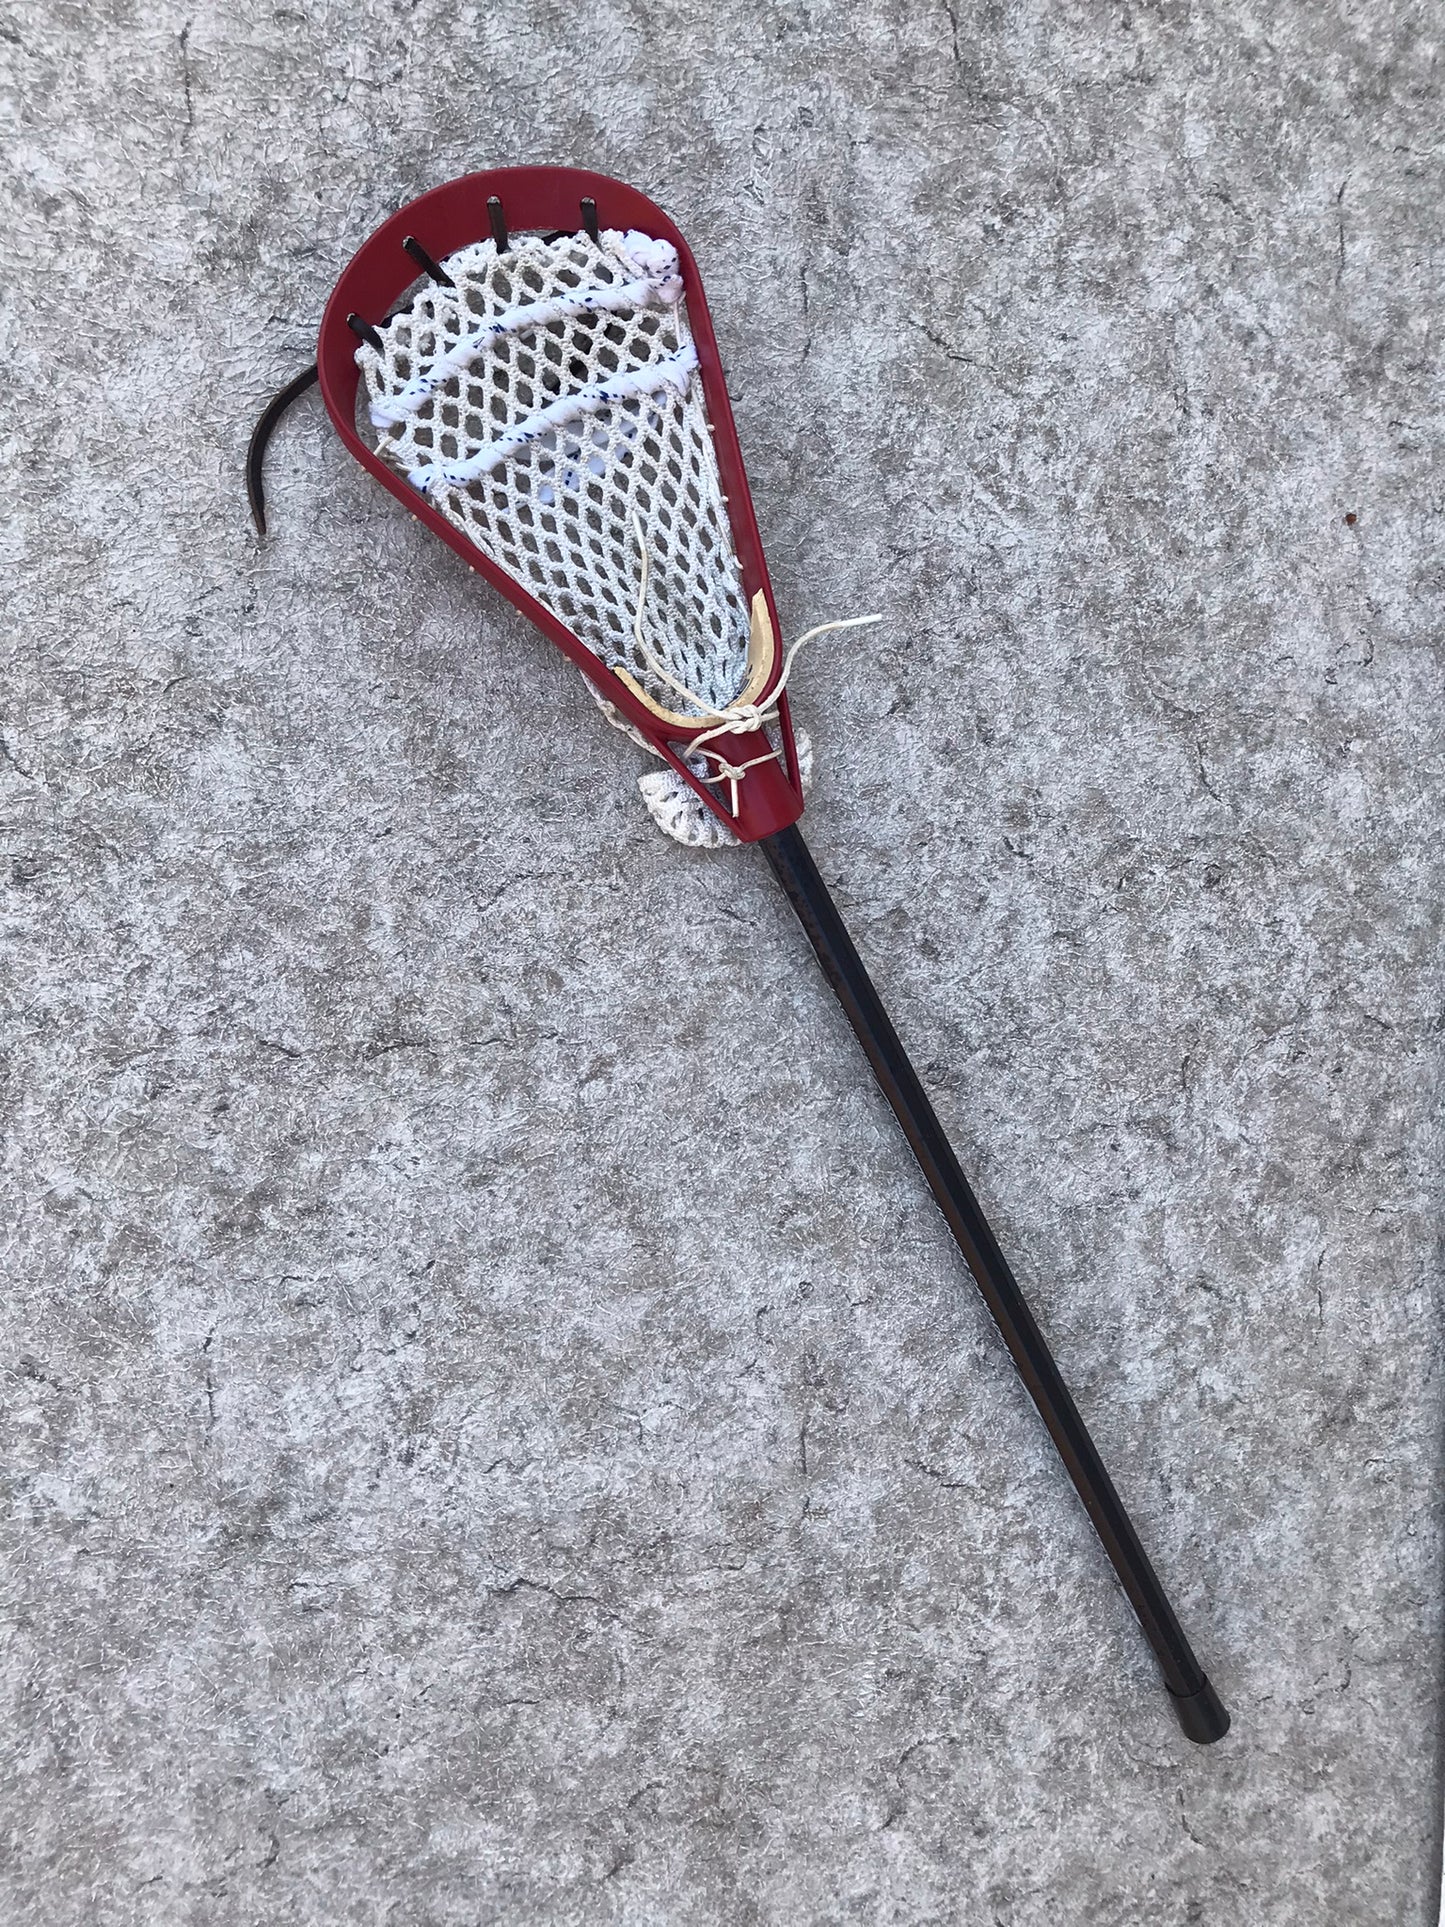 Lacrosse Stick Child Size 35 inch Brine Black Red